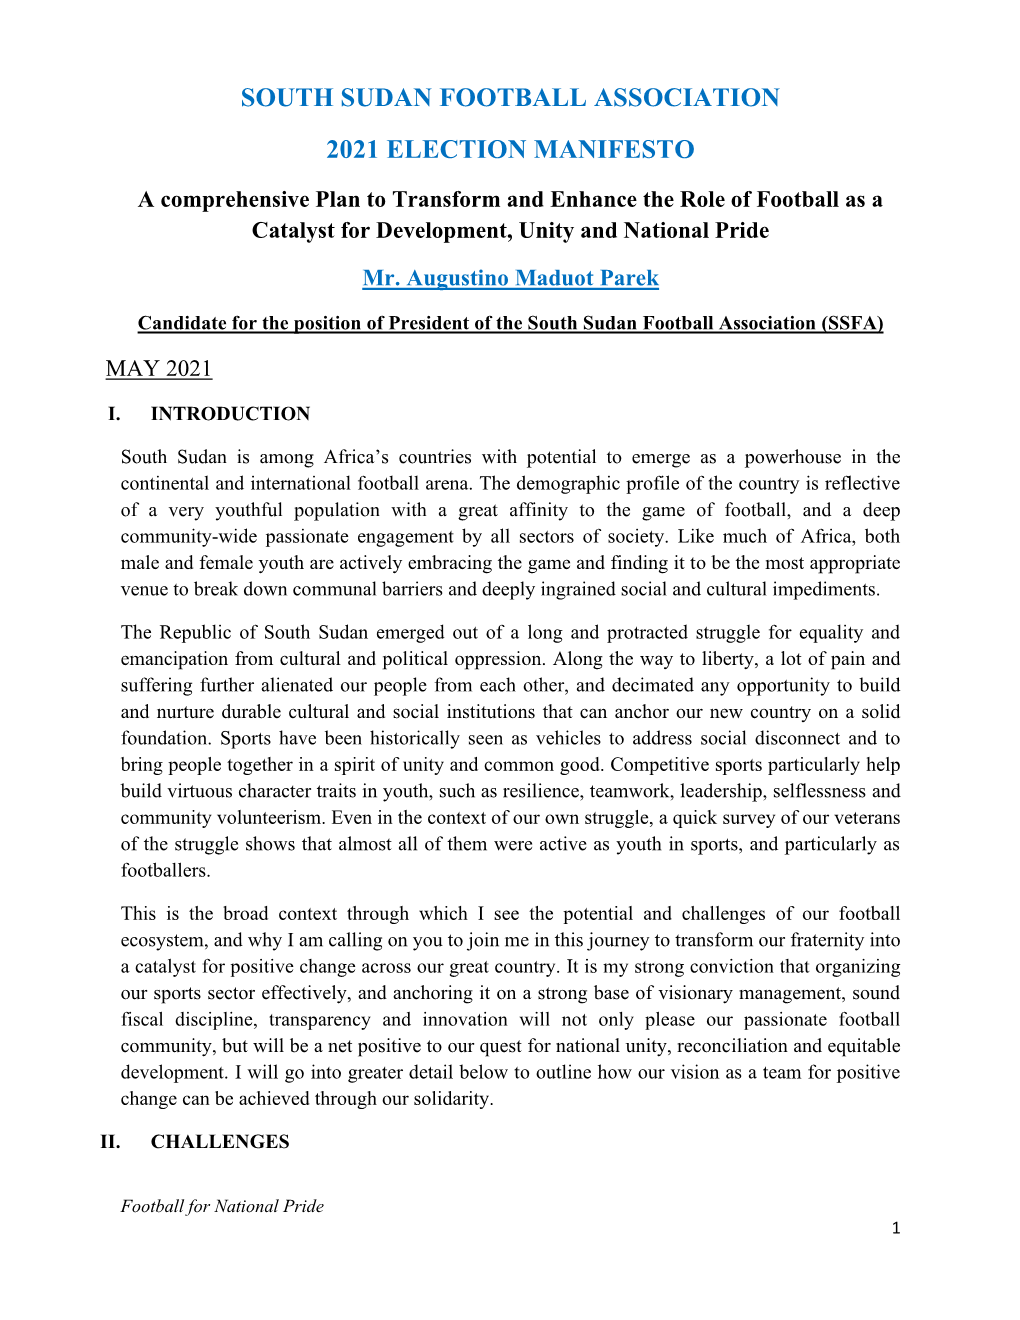 South Sudan Football Association 2021 Election Manifesto